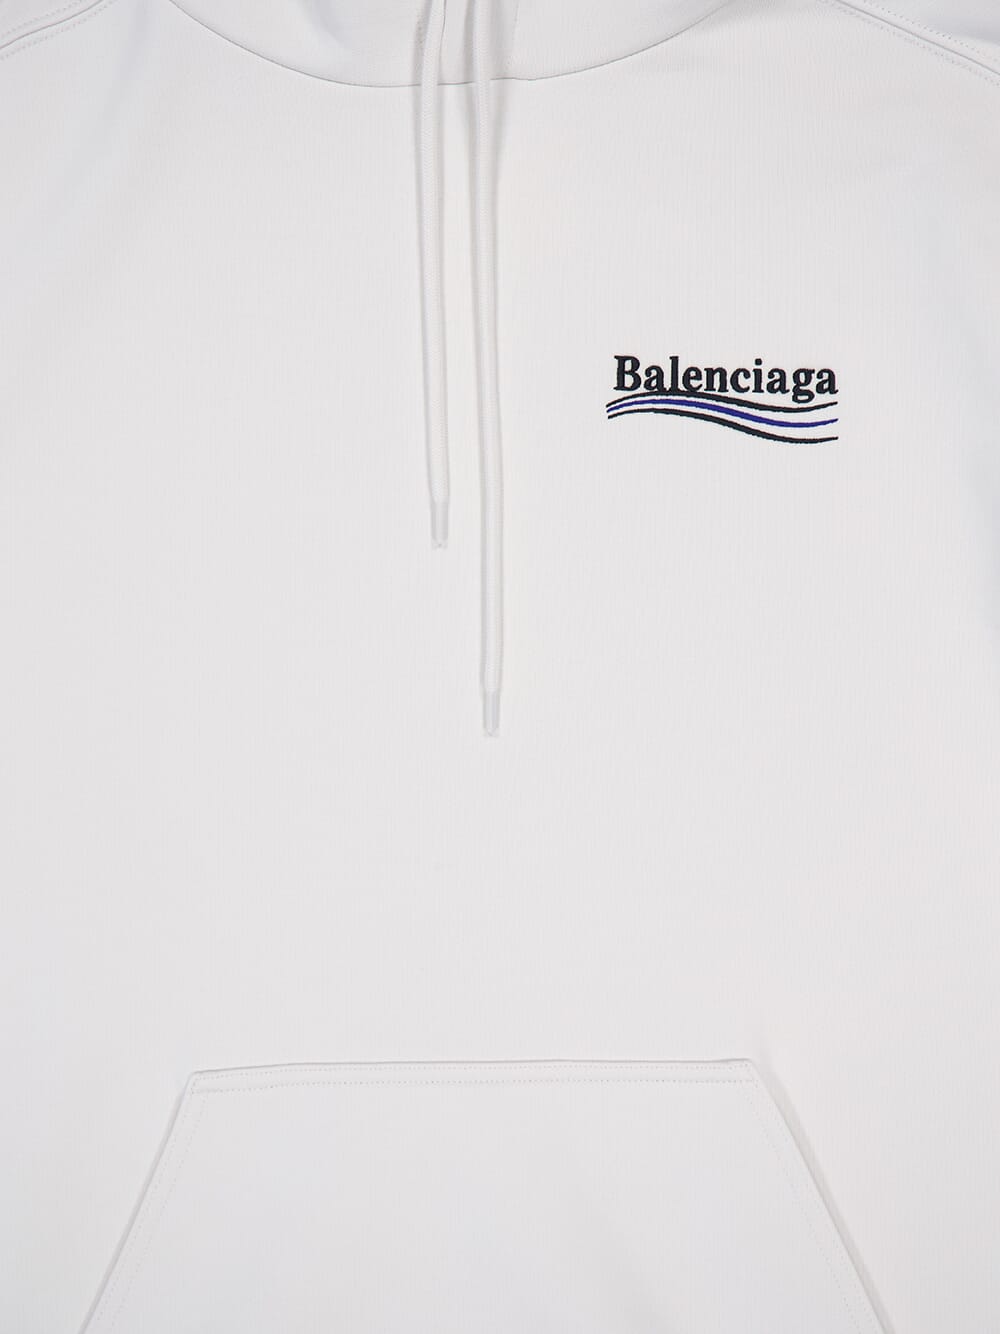 BalenciagaPolital Campaign Hoodie in White at Fashion Clinic